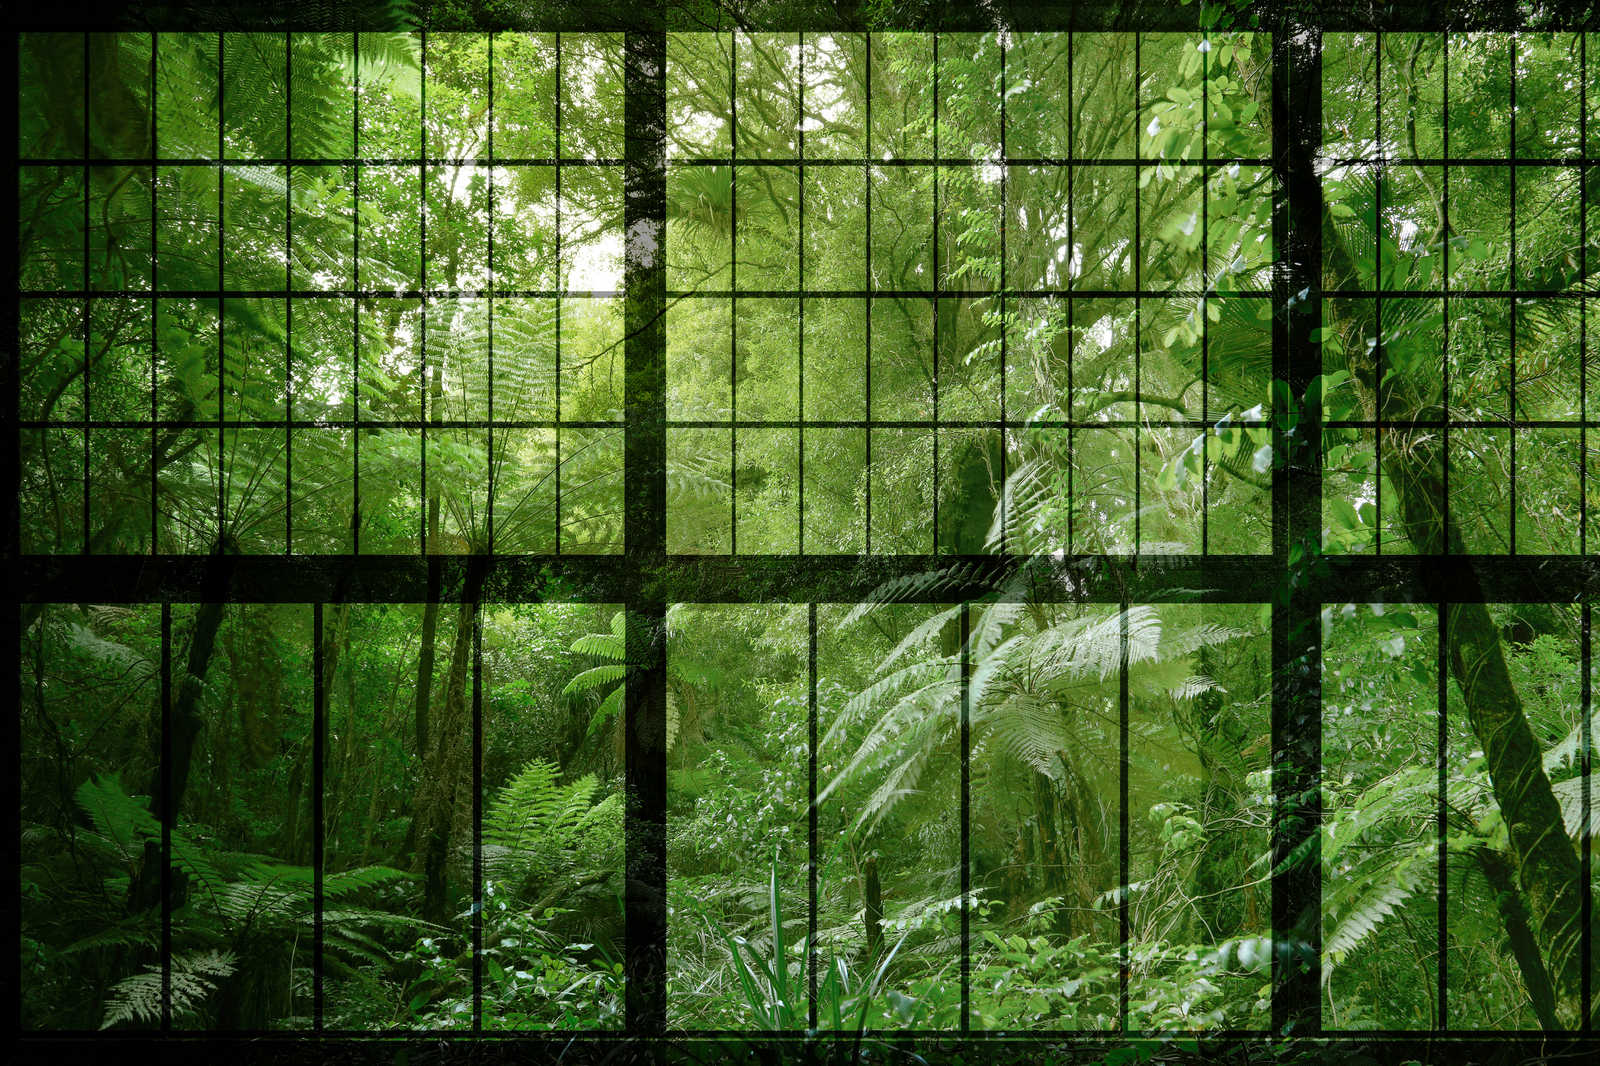             Rainforest 2 - Pintura sobre lienzo en ventana de buhardilla con vistas a la selva - 0,90 m x 0,60 m
        